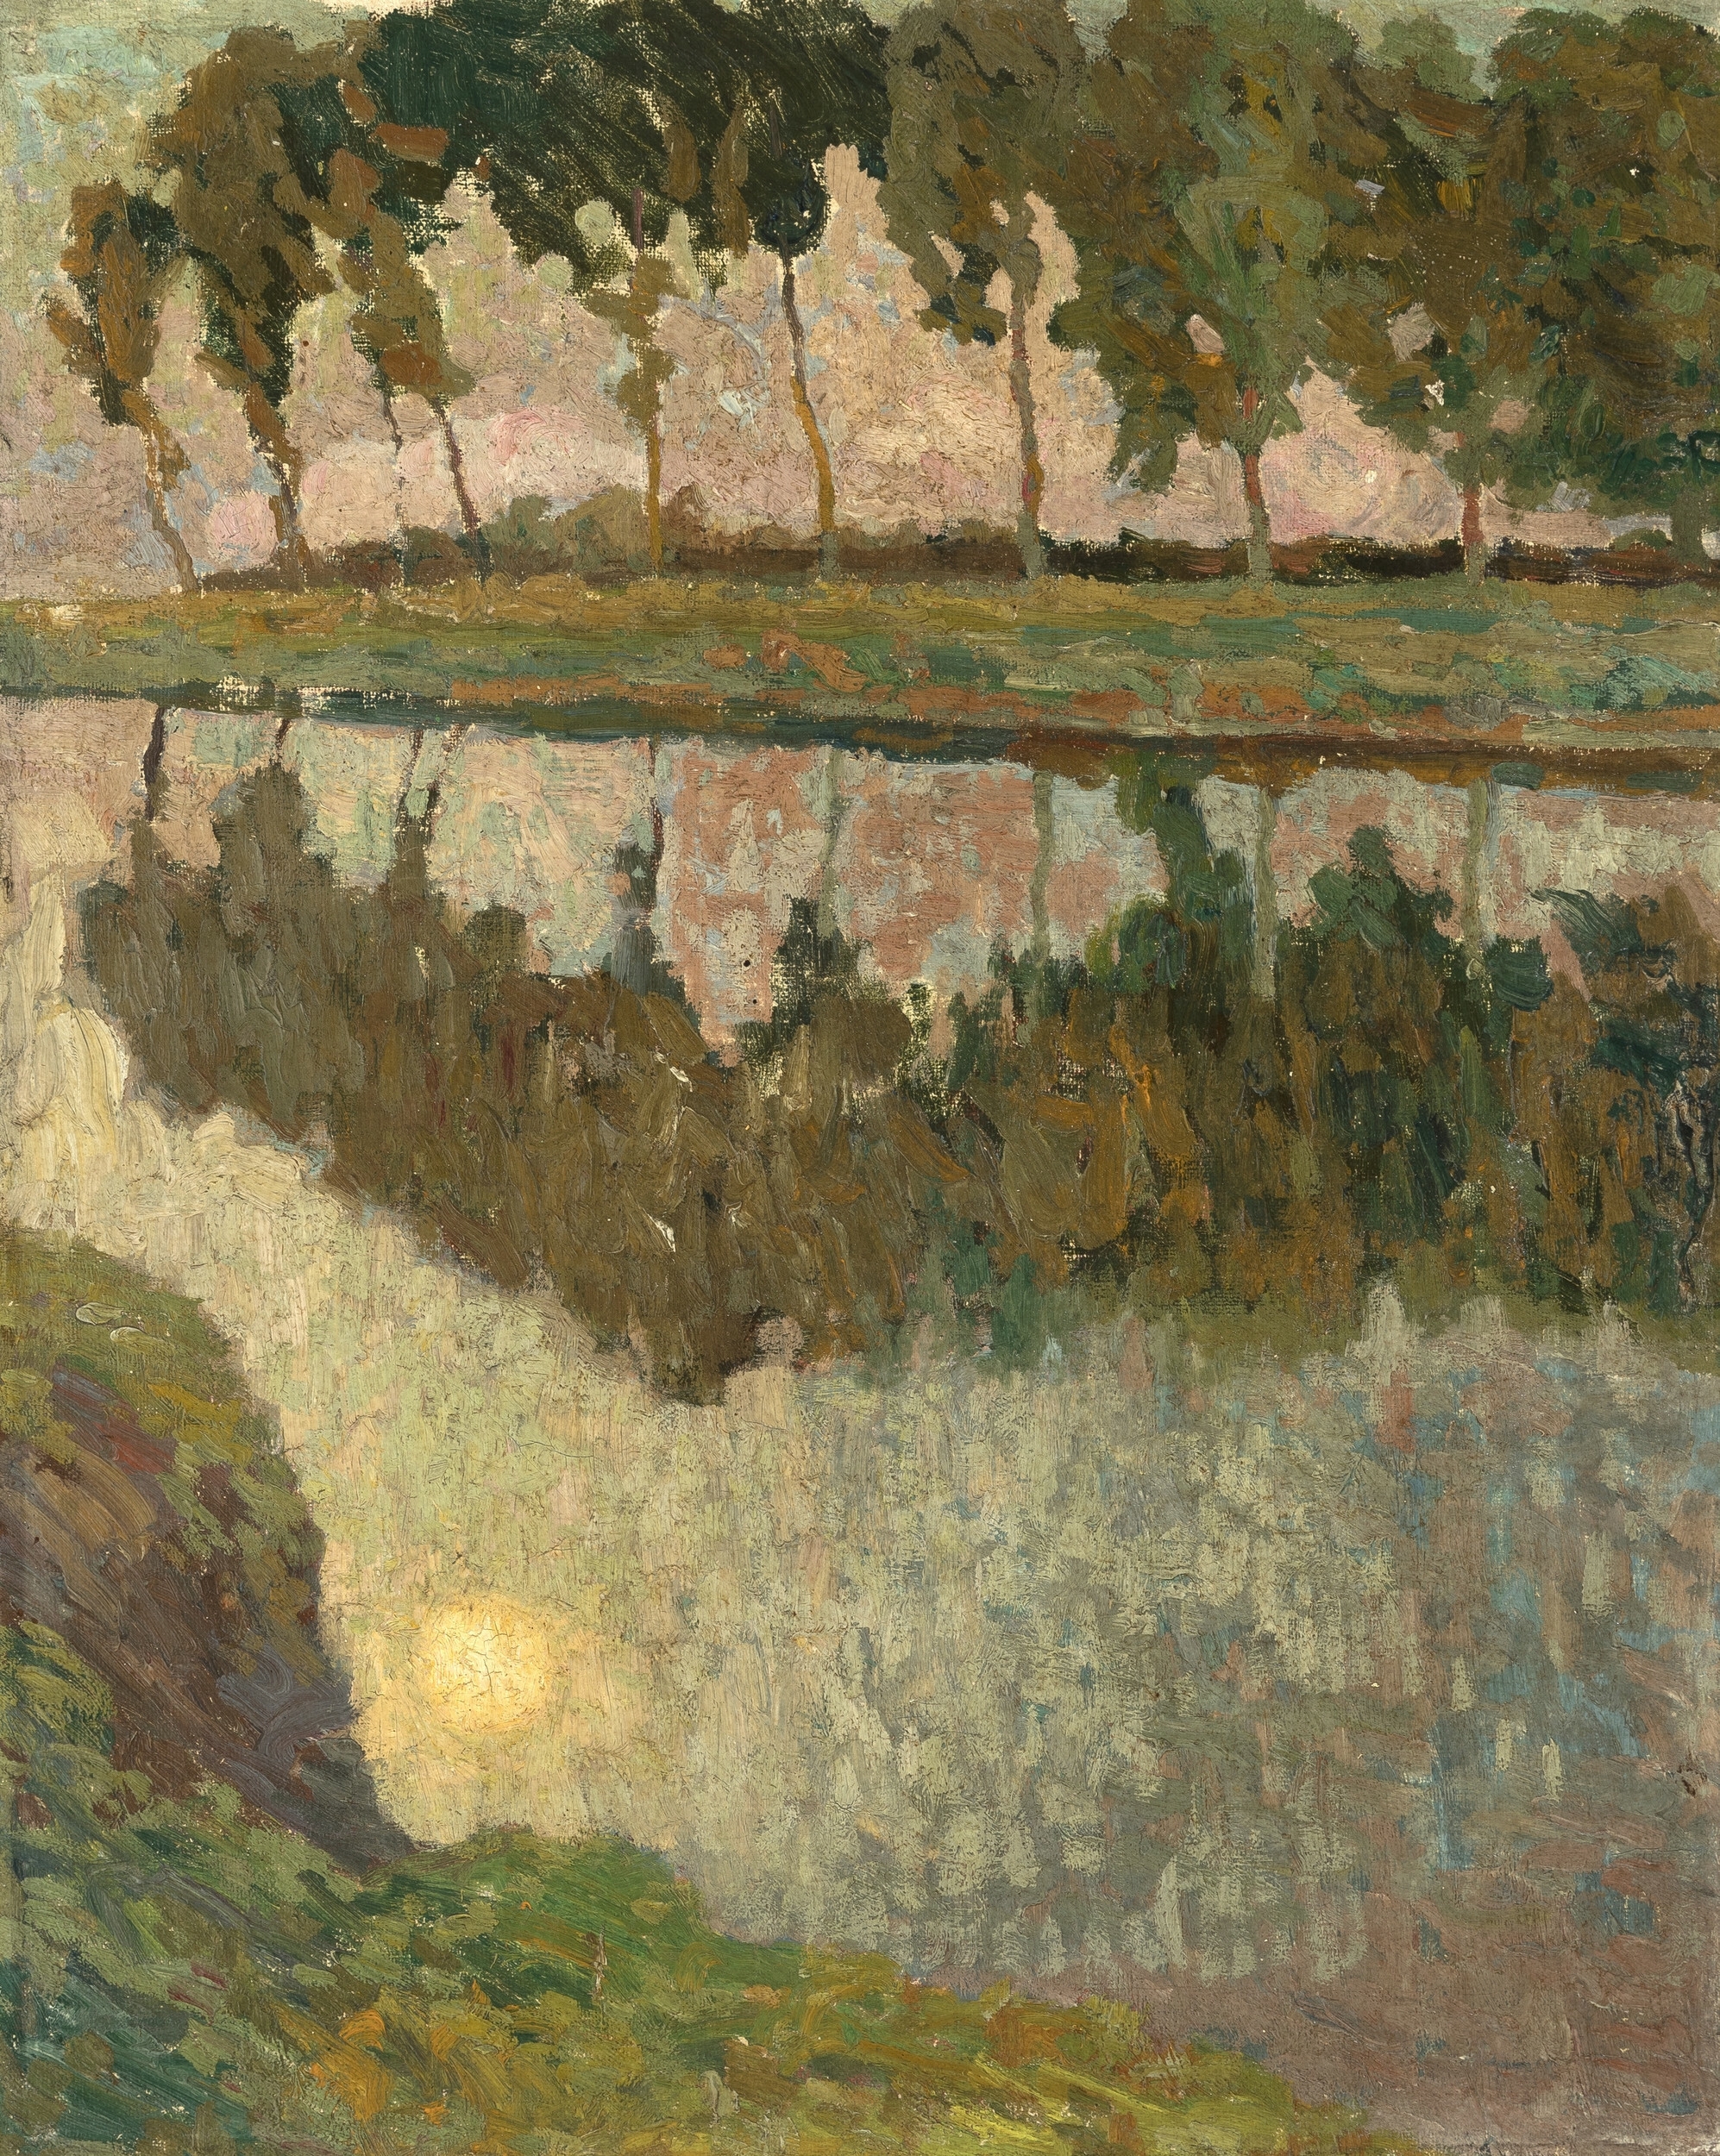 Poplars along the river Lys (ca. 1905 - Gustave de Smet